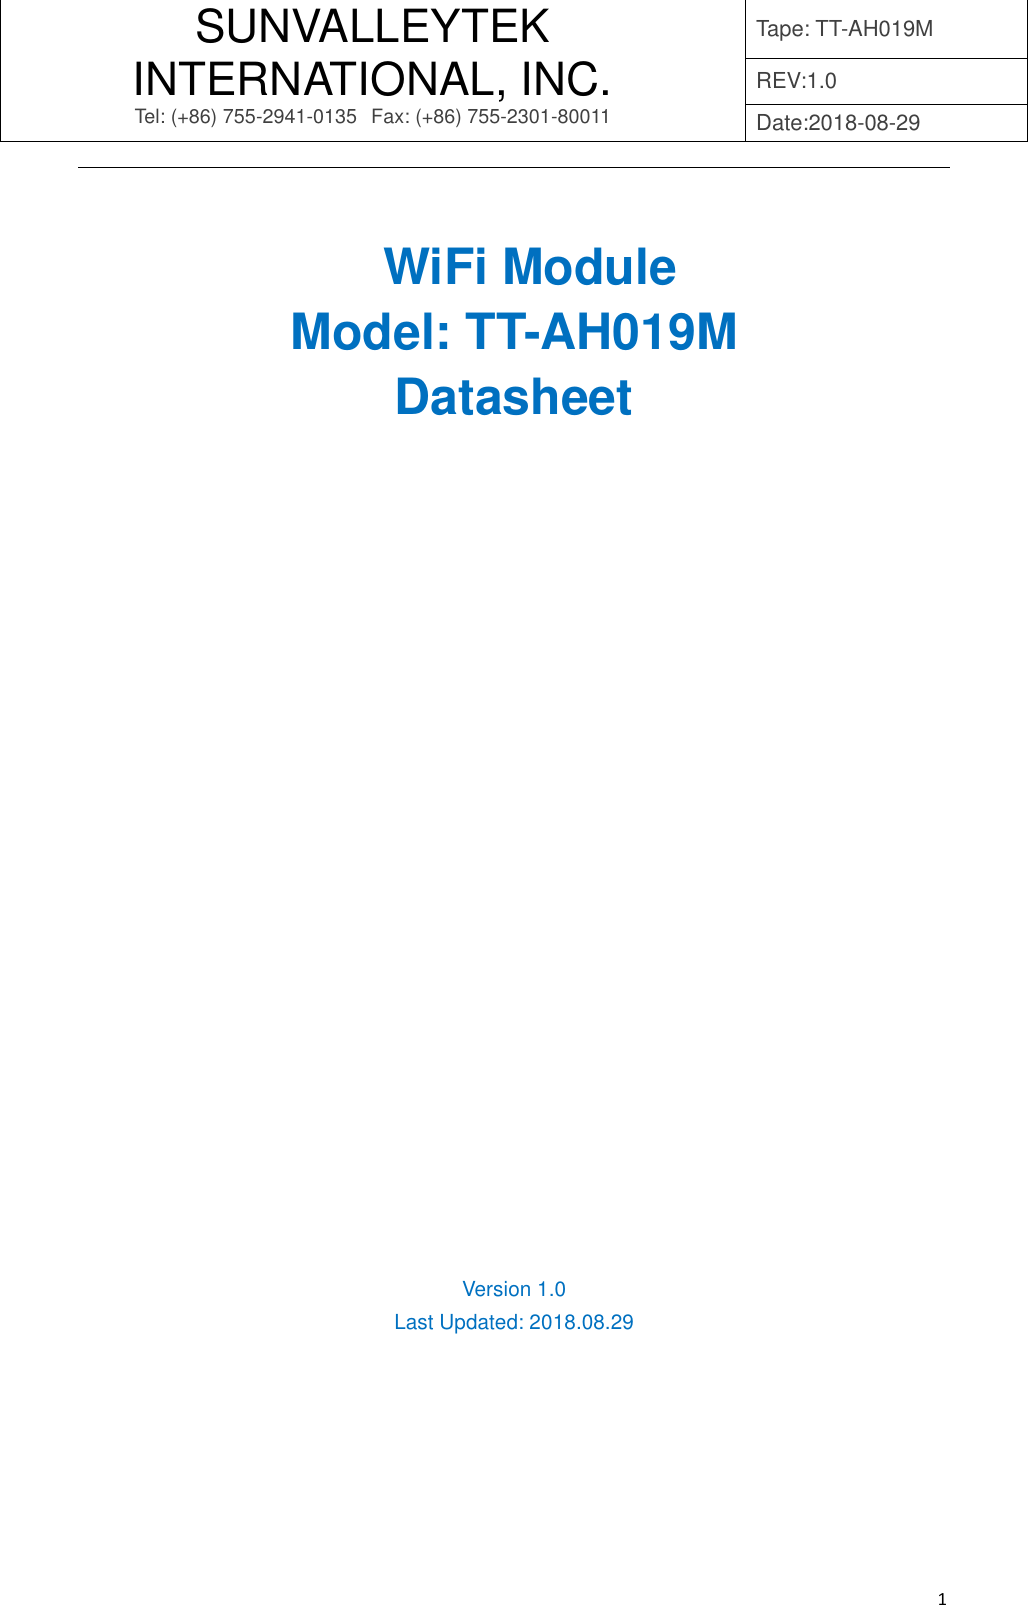 SUNVALLEYTEK INTERNATIONAL, INC. Tel: (+86) 755-2941-0135 Fax: (+86) 755-2301-80011 Tape: TT-AH019M REV:1.0 Date:2018-08-29   1     WiFi Module Model: TT-AH019M Datasheet                          Version 1.0 Last Updated: 2018.08.29       